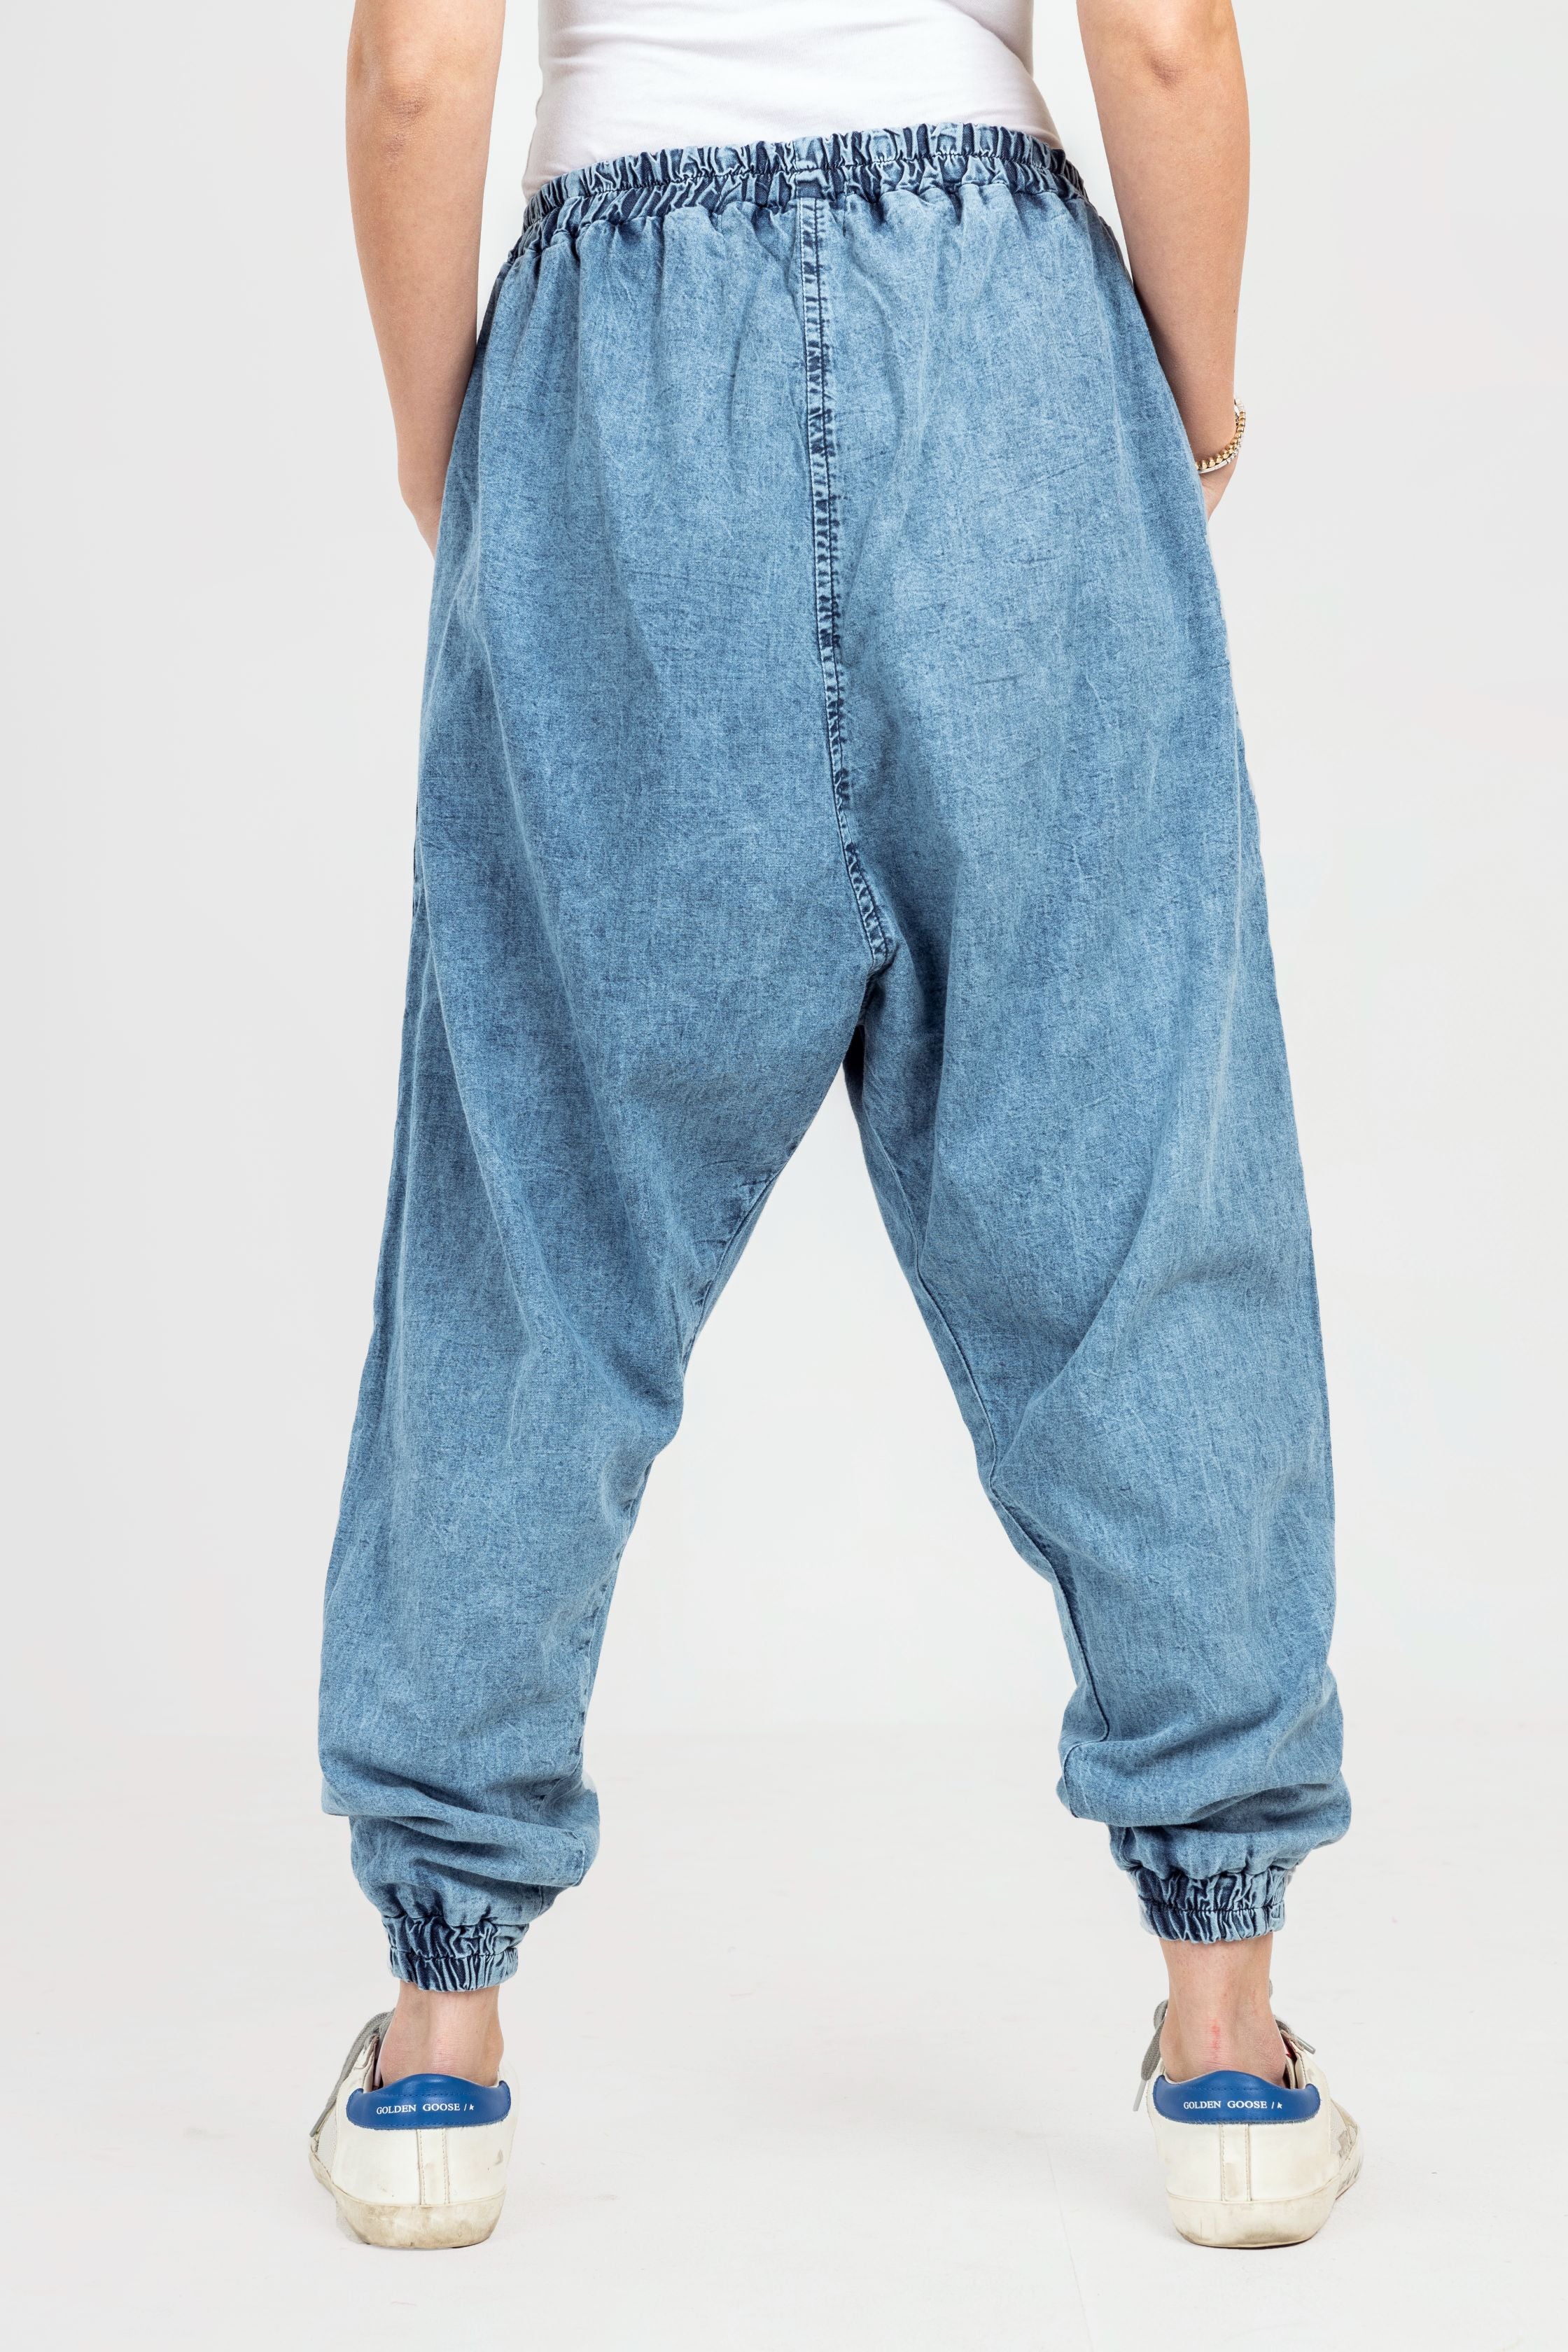 Generic Plus Size Harem Jeans Men Stretched Denim Pants Streetwear @ Best  Price Online | Jumia Egypt